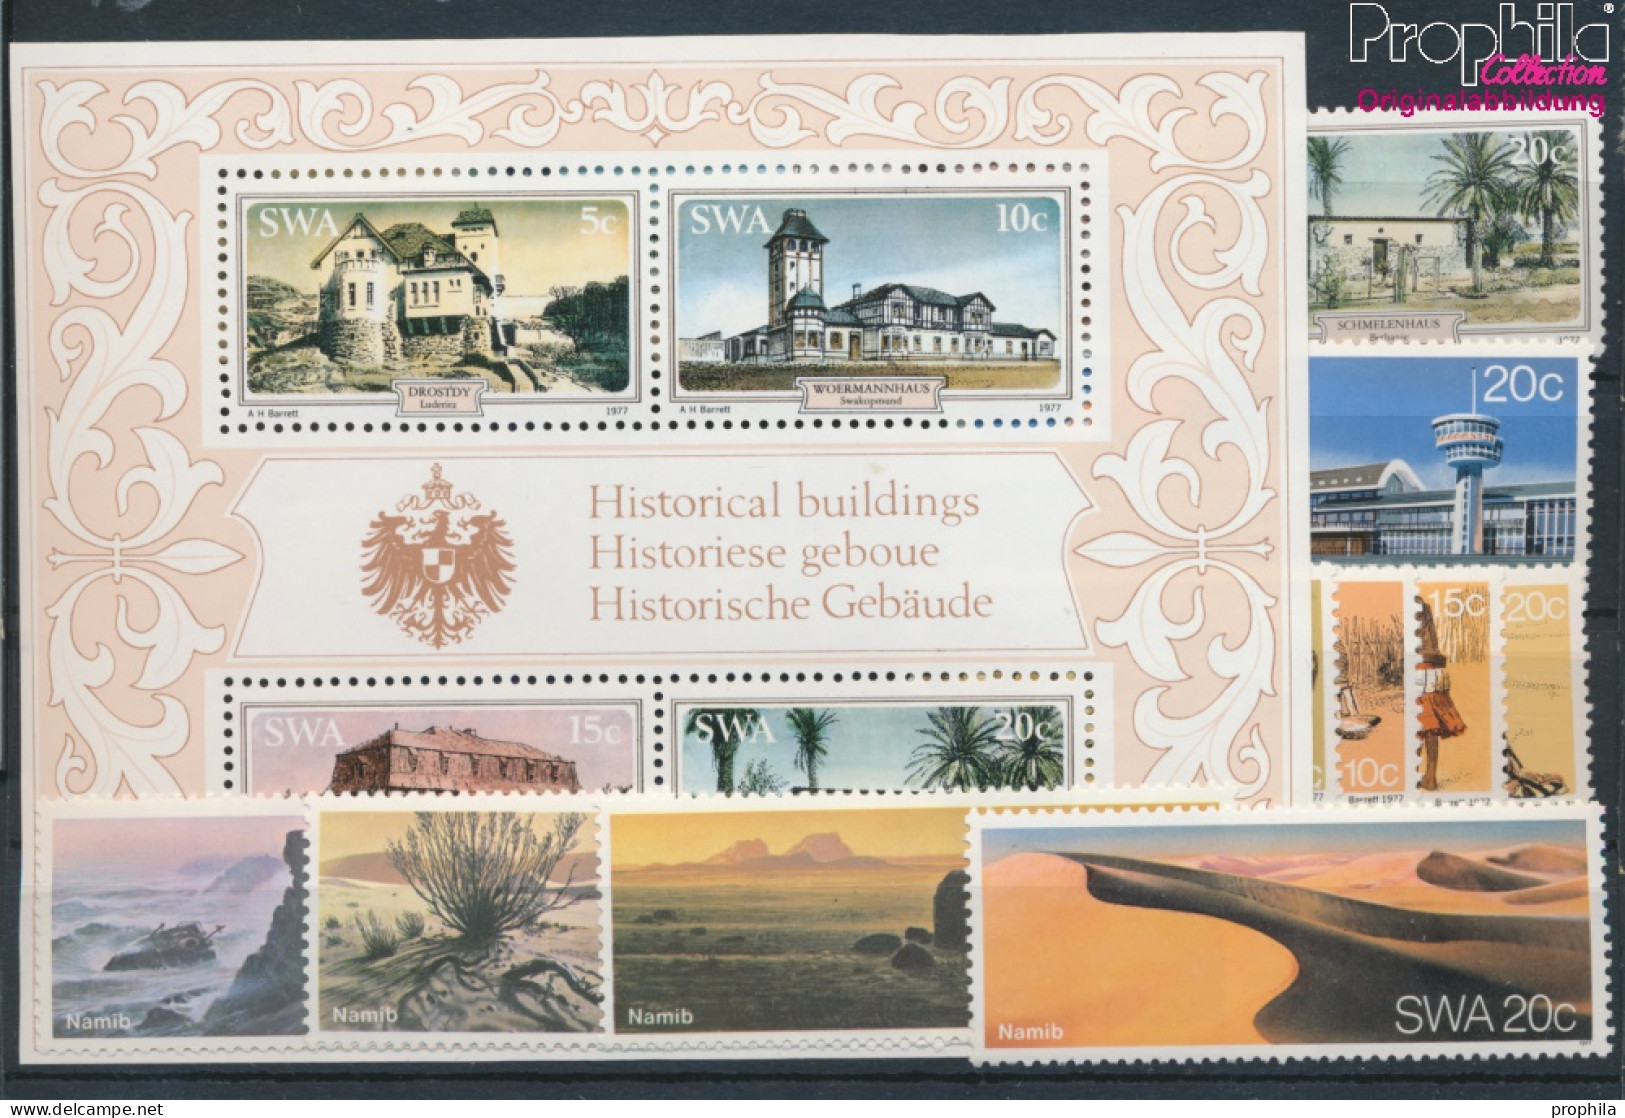 Namibia - Südwestafrika Postfrisch Namib-Wüste 1977 Gebäude, Namib, Wambos, Flughafen  (10368359 - South West Africa (1923-1990)